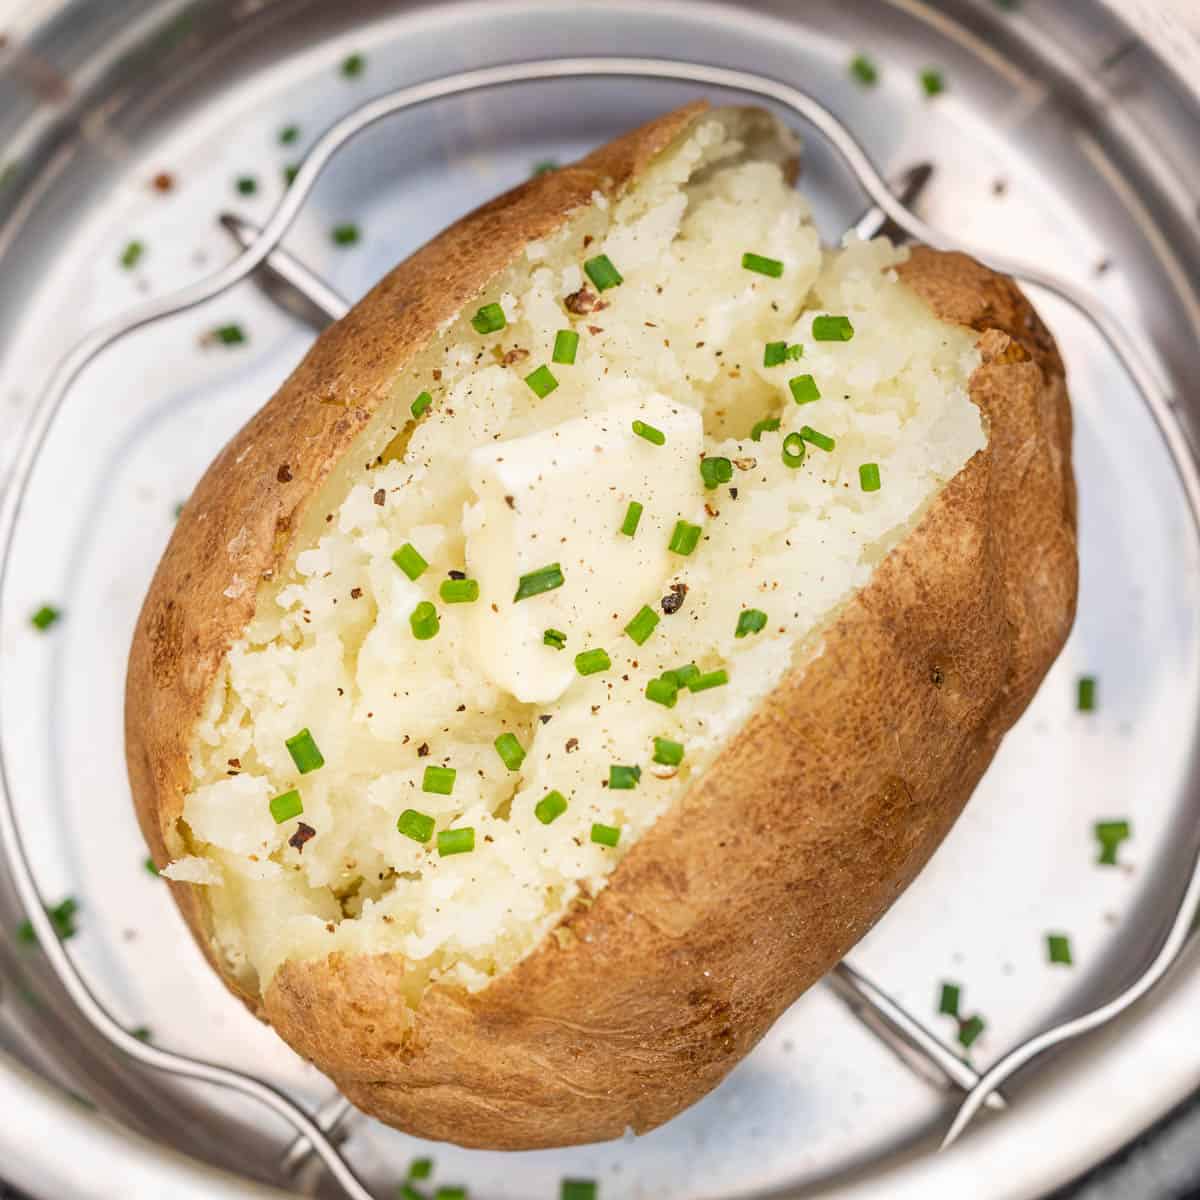 Instant pot baked potato.